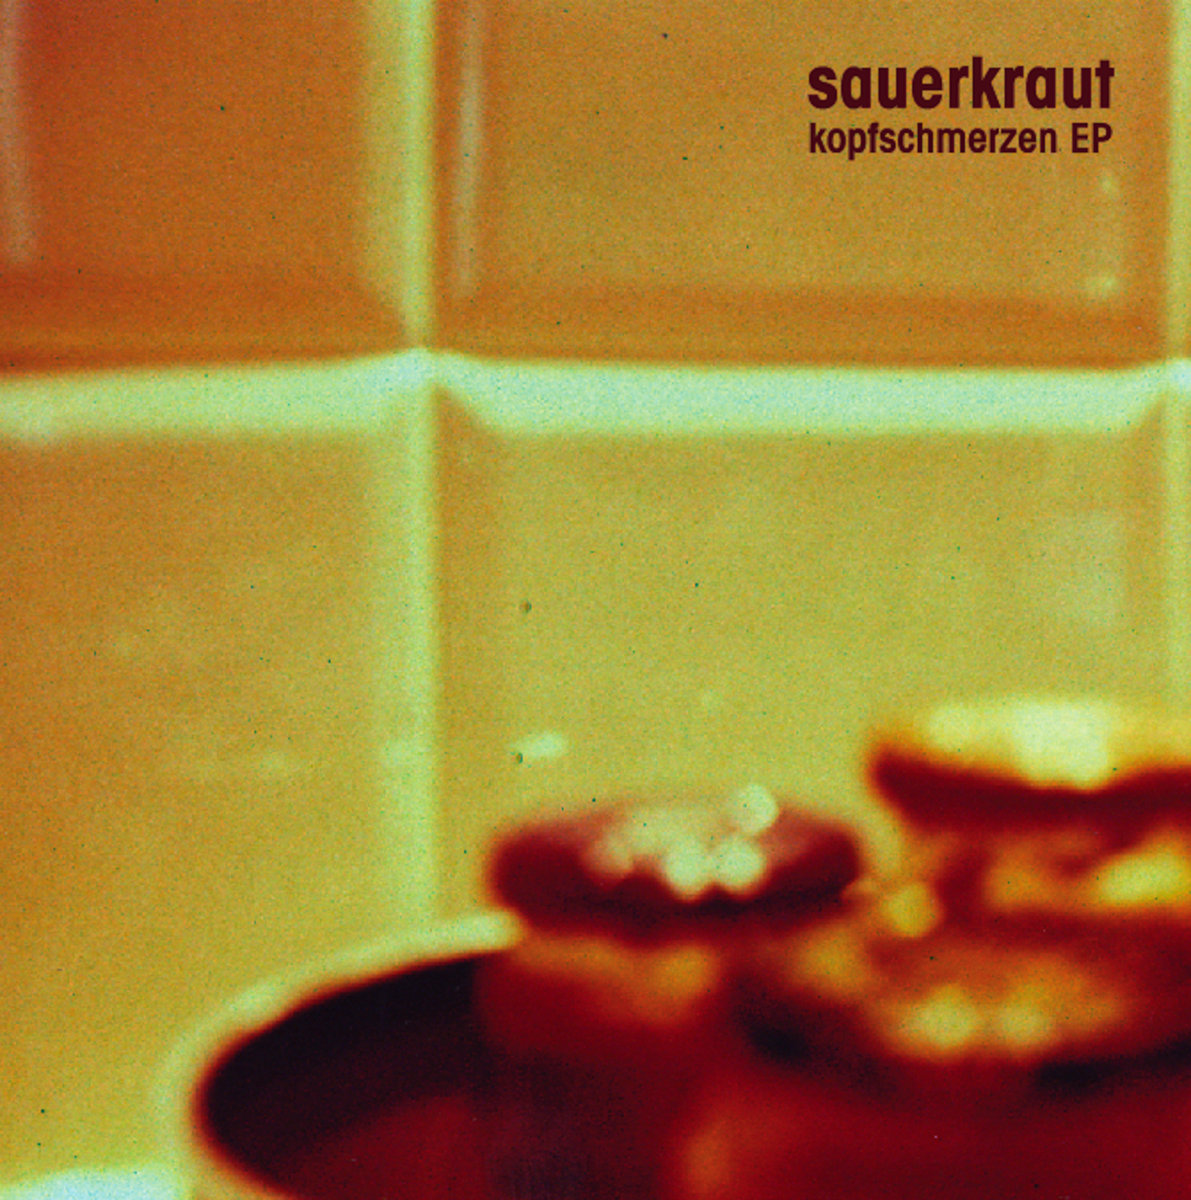 sauerkraut. kopfschmerzen (EP). Front Cover. 2008